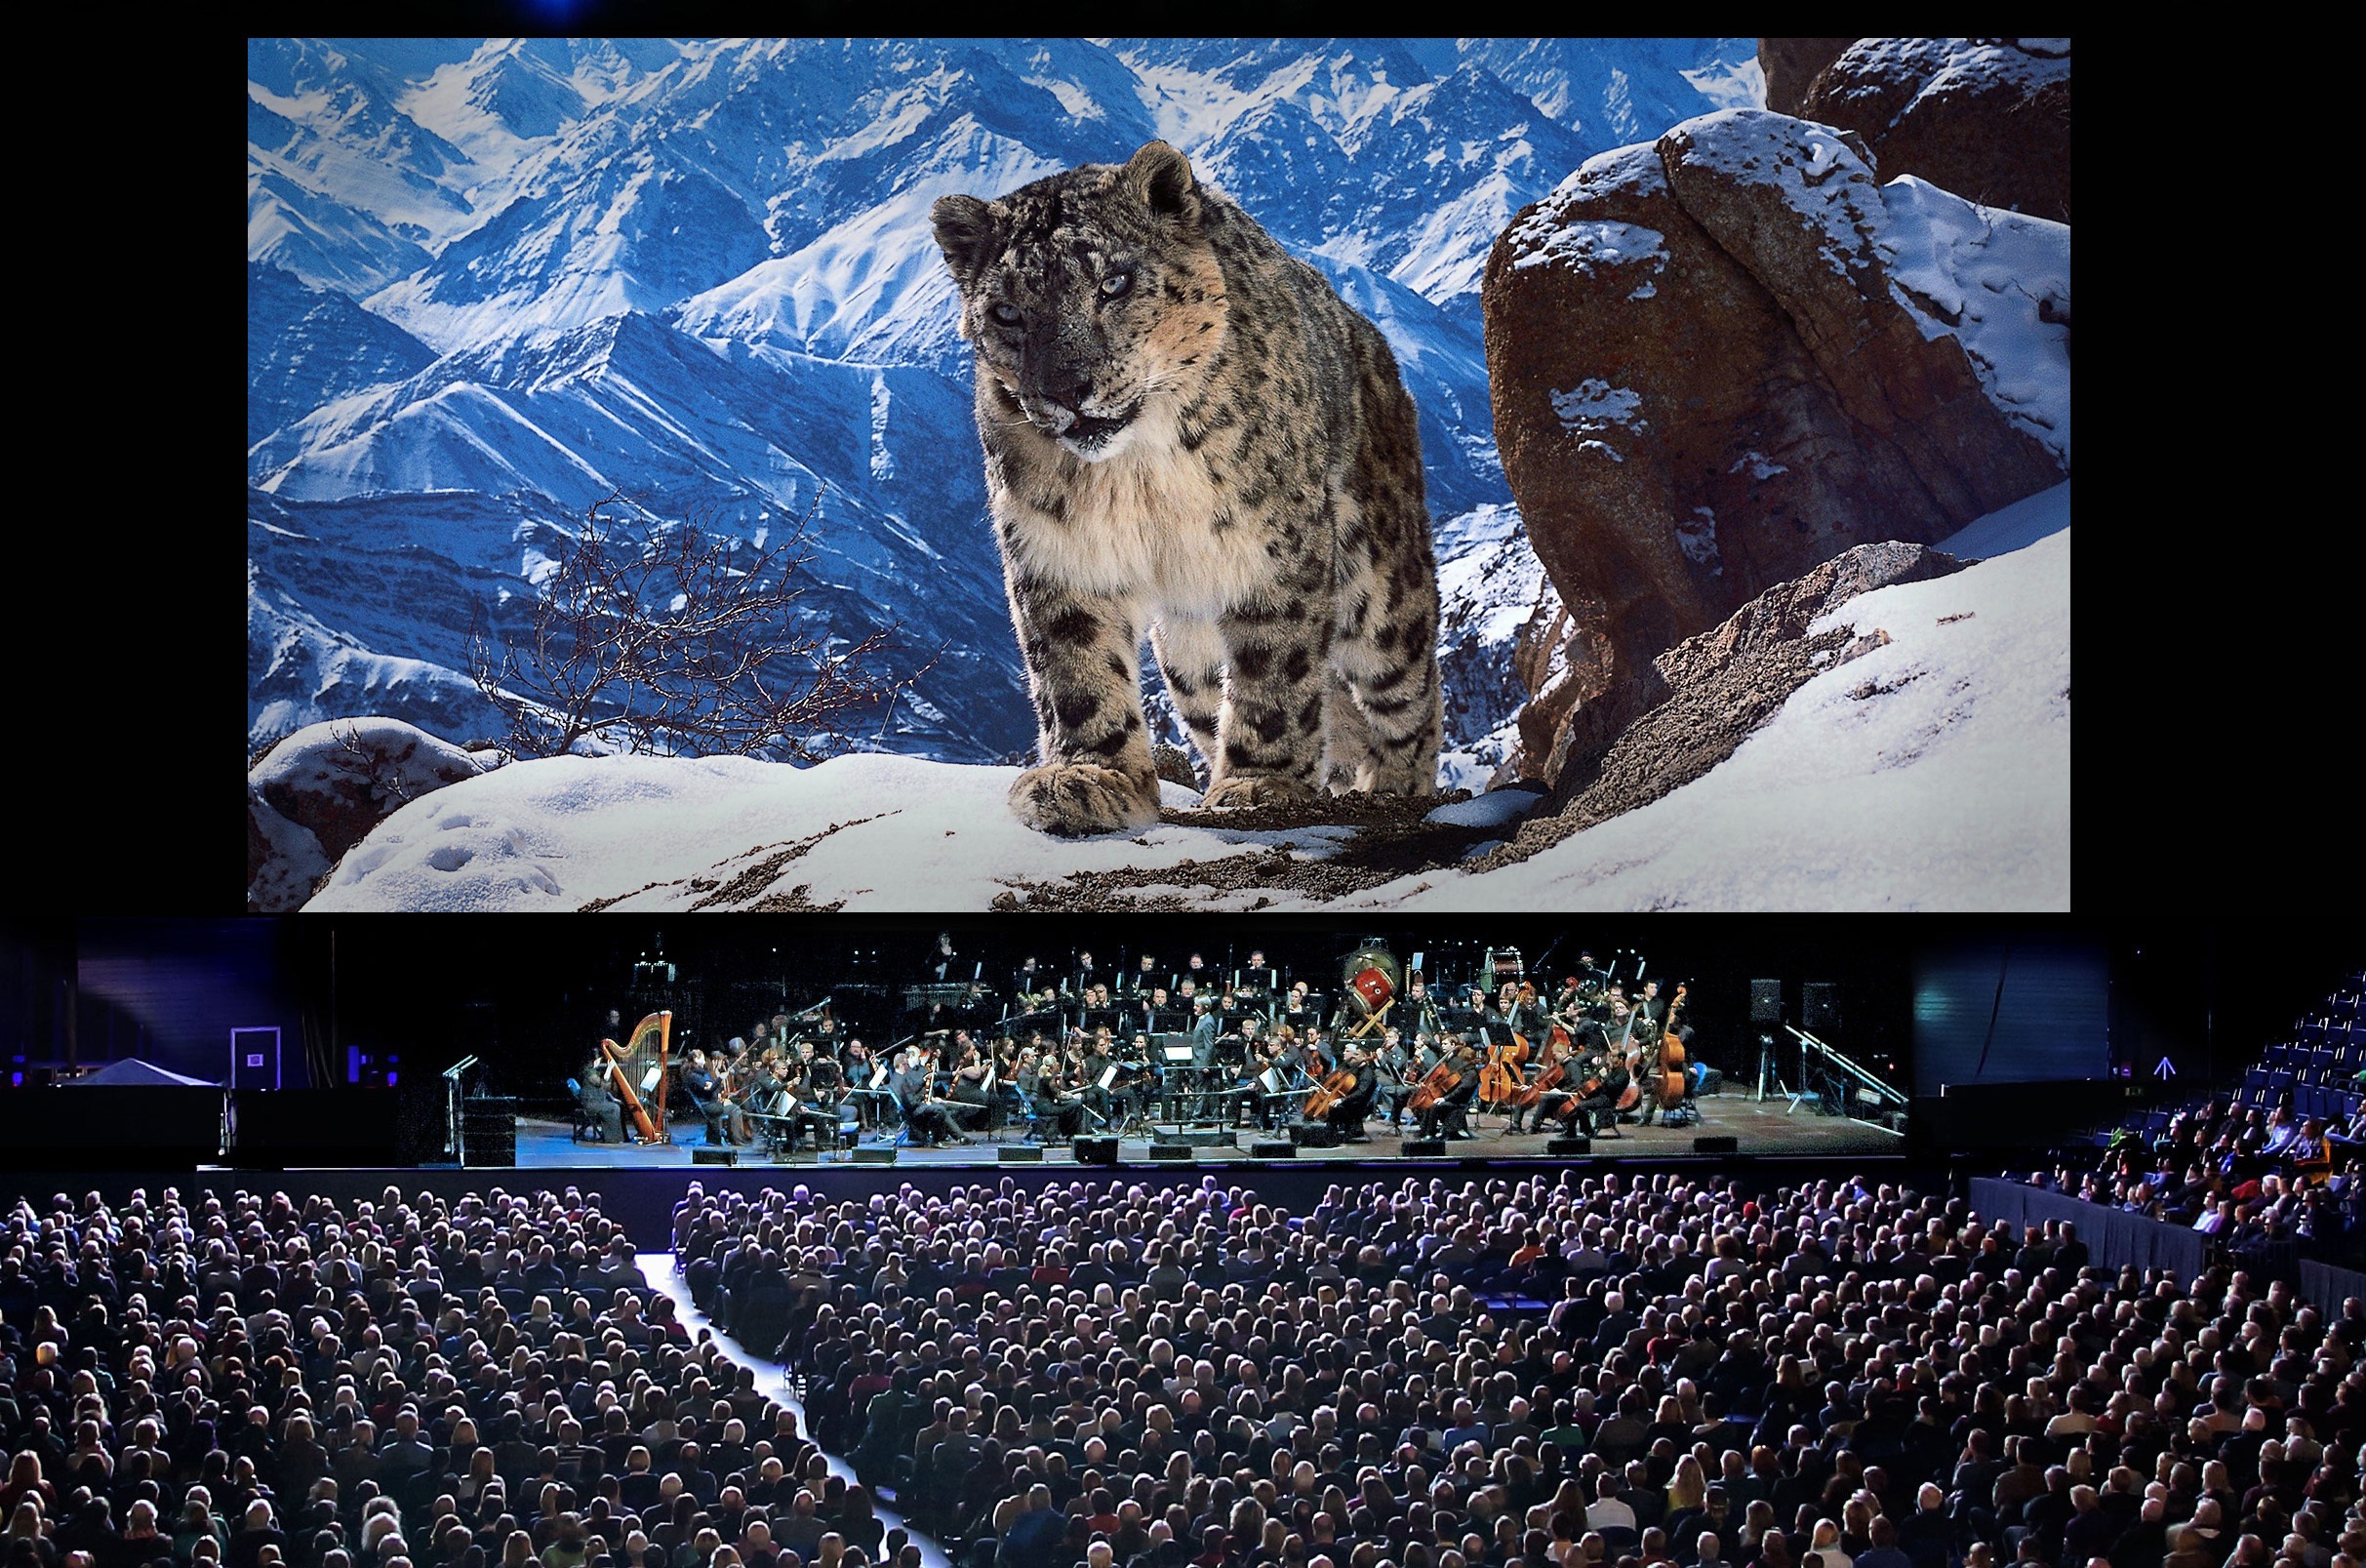 planet_earth_ii_live_in_concert_-_snowleopard